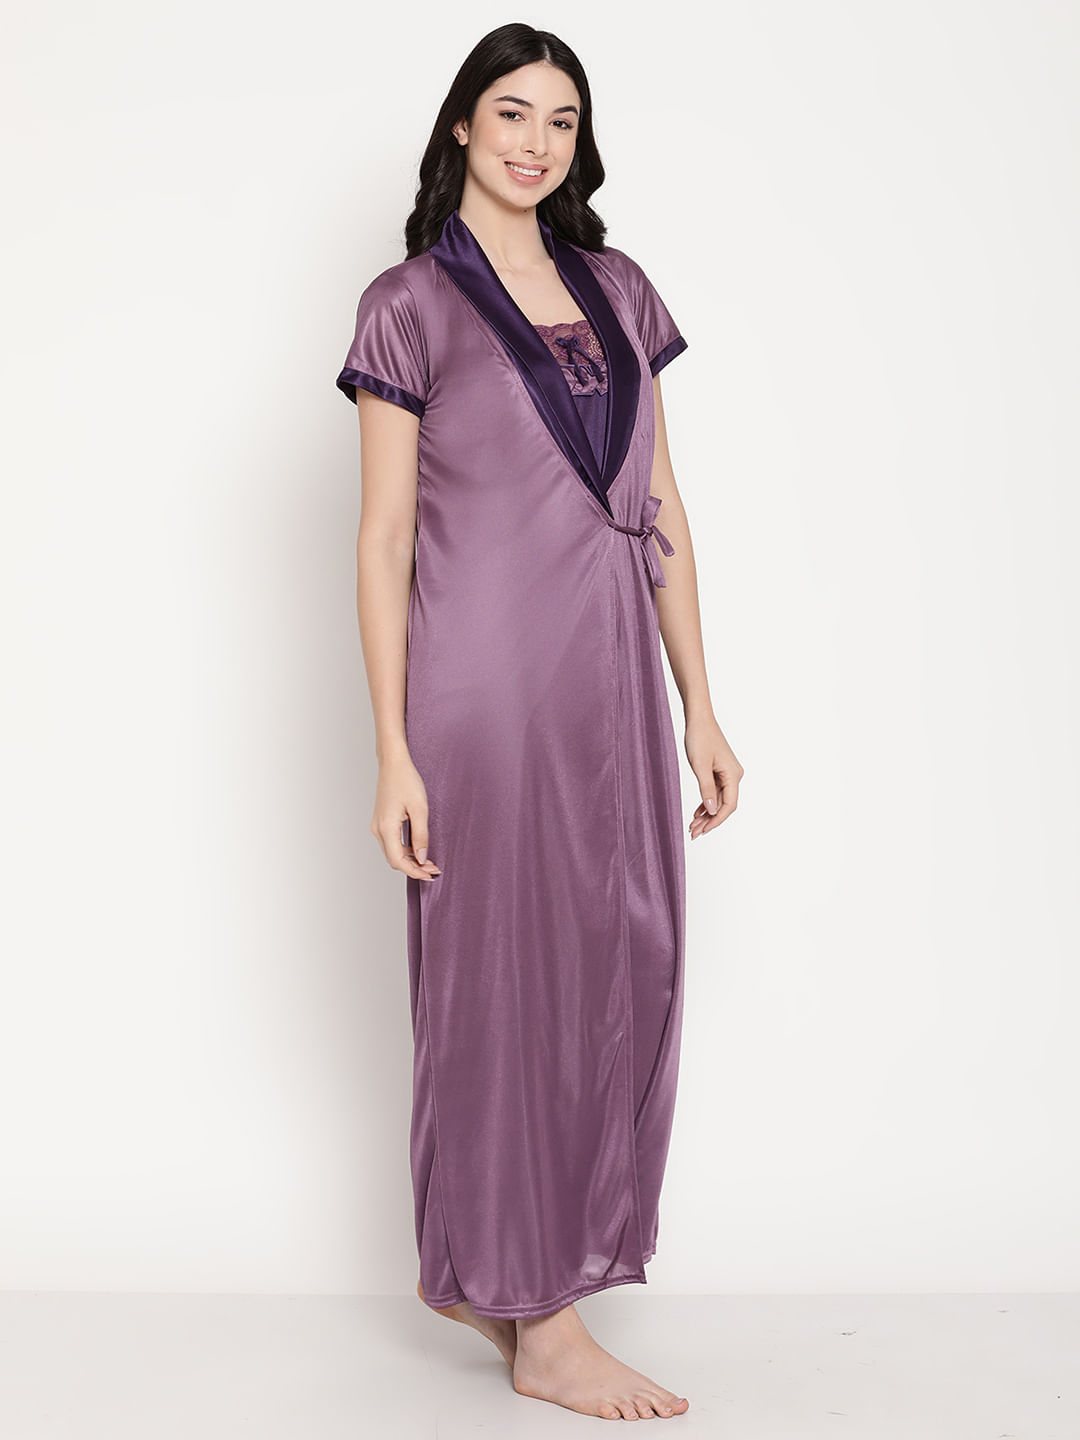 Buy Purple Satin 2 Piece Nighty with Robe Set for Women Online at Secret  Wish